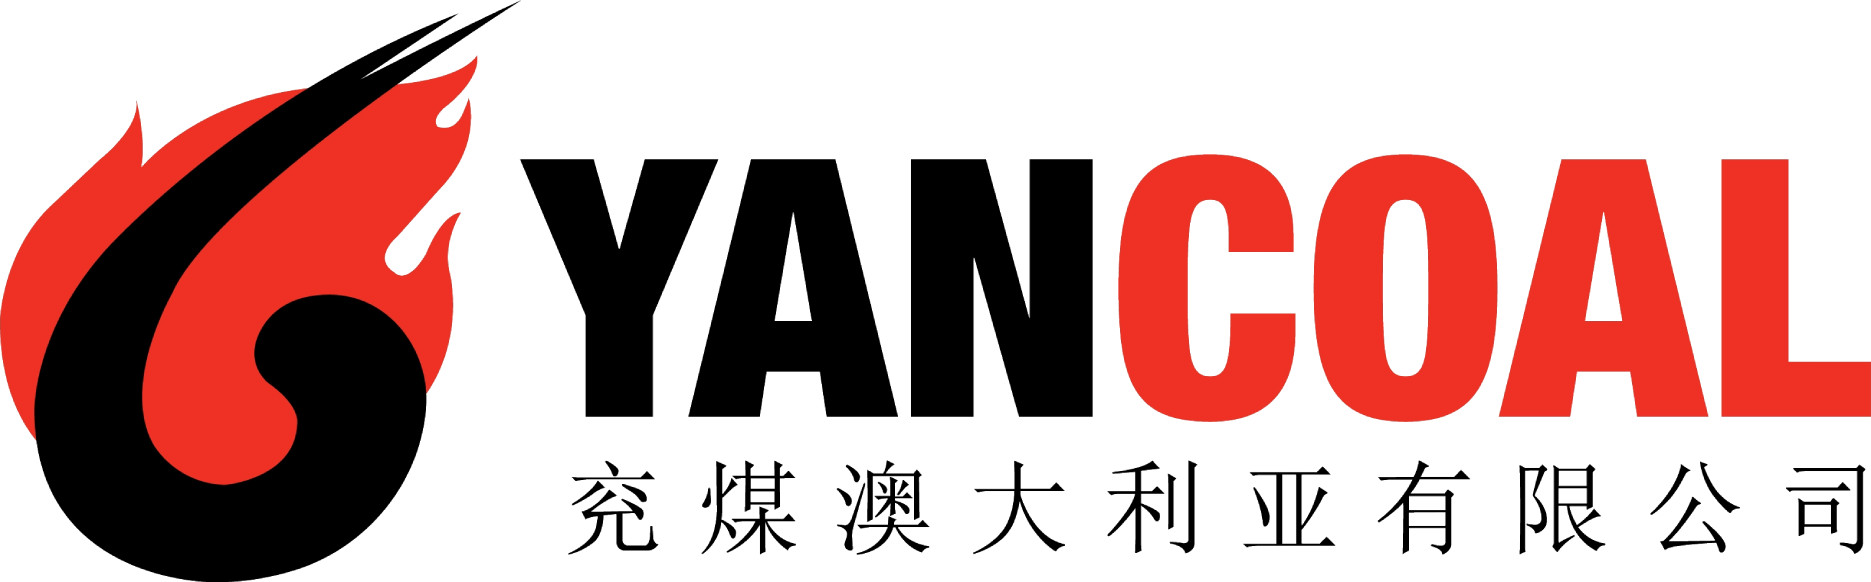 Yancoal logo large (transparent PNG)